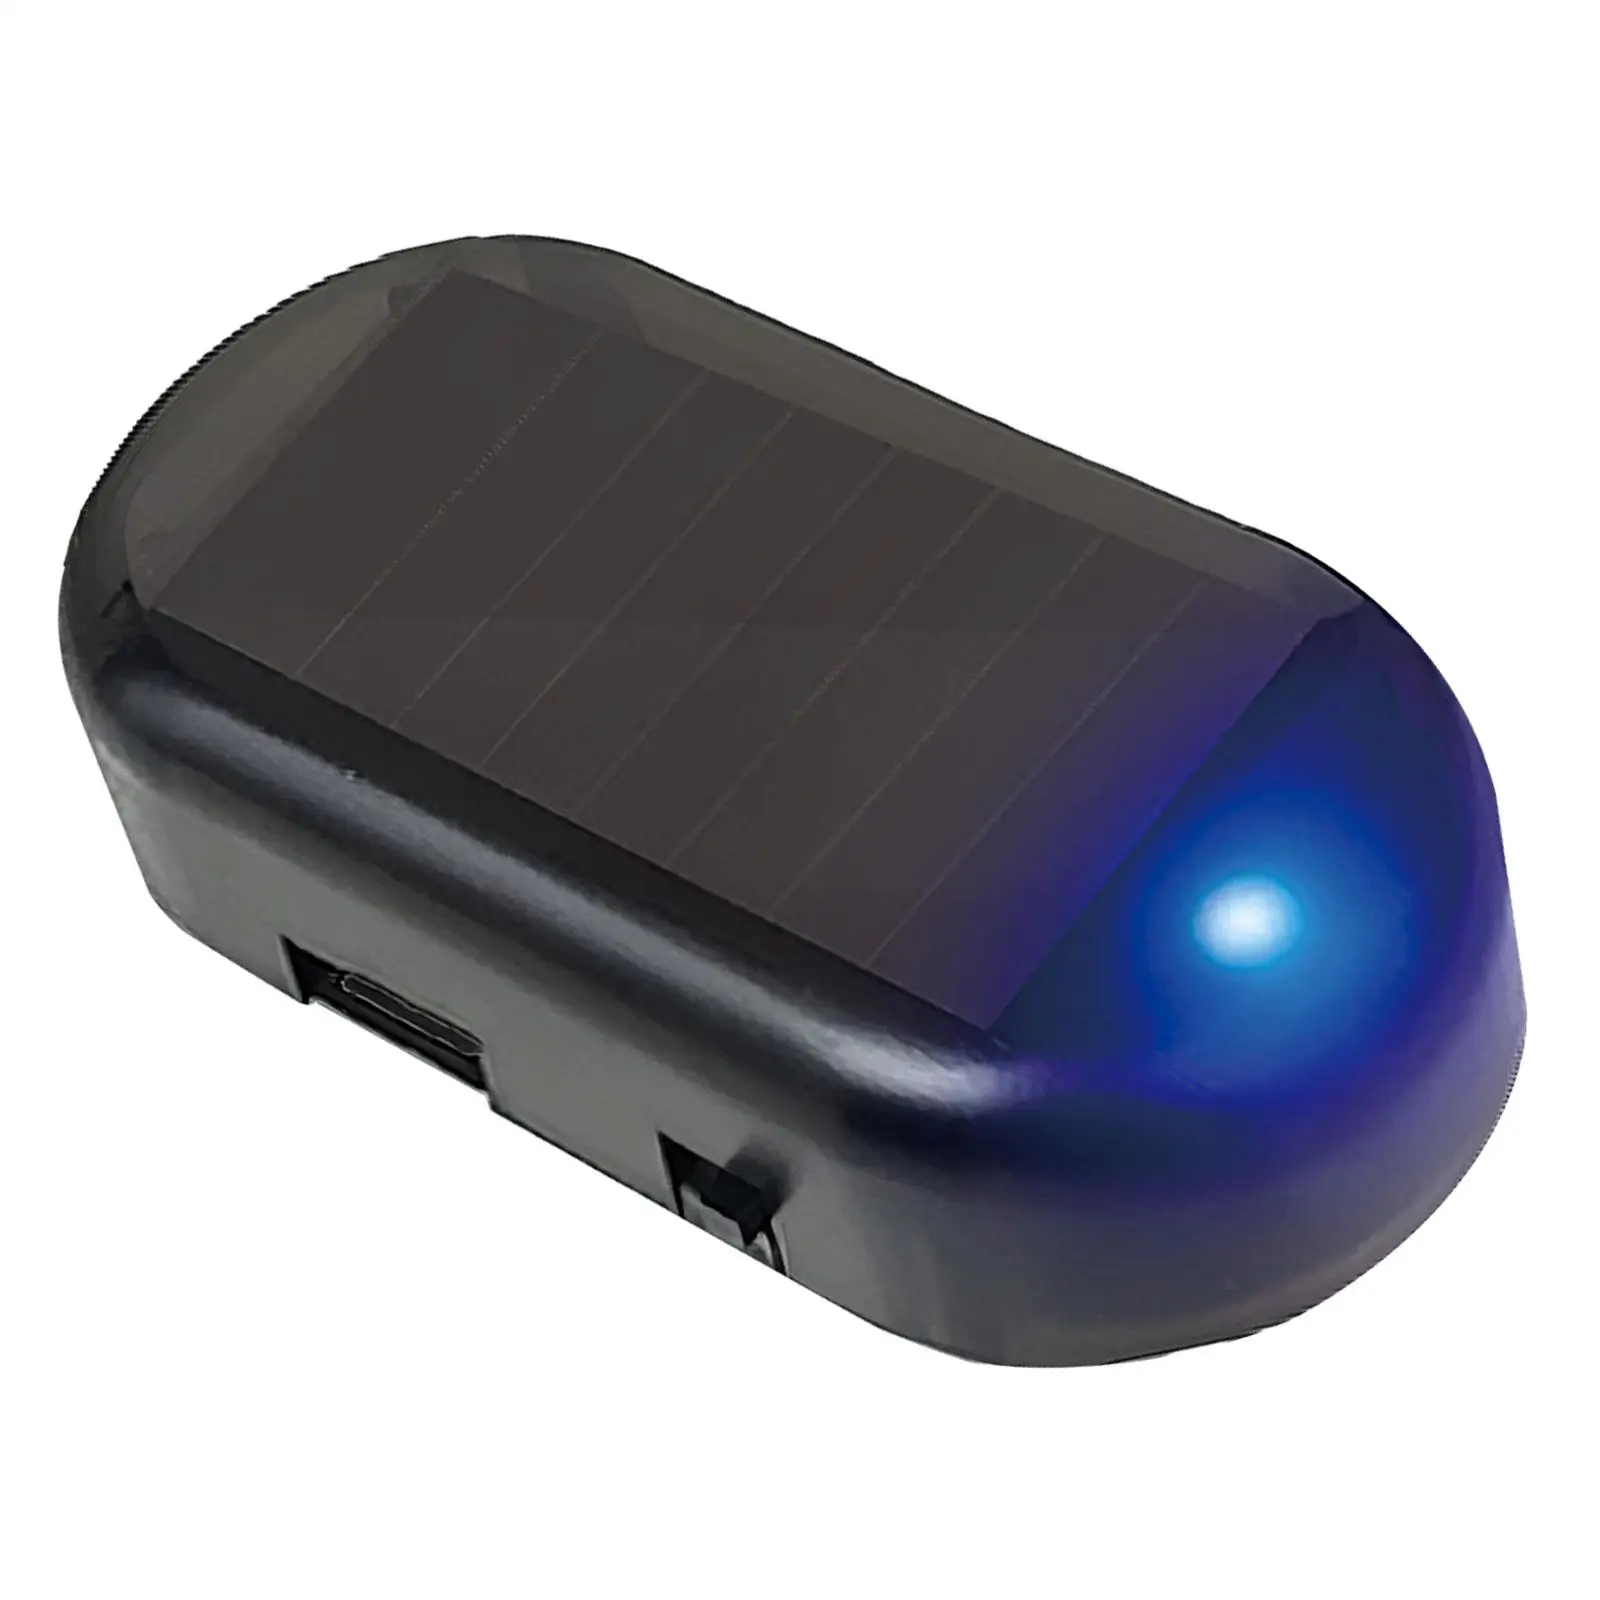 Car Alarm Lamp Car Security Anti Theft Device LED Flash Strobe Light with USB